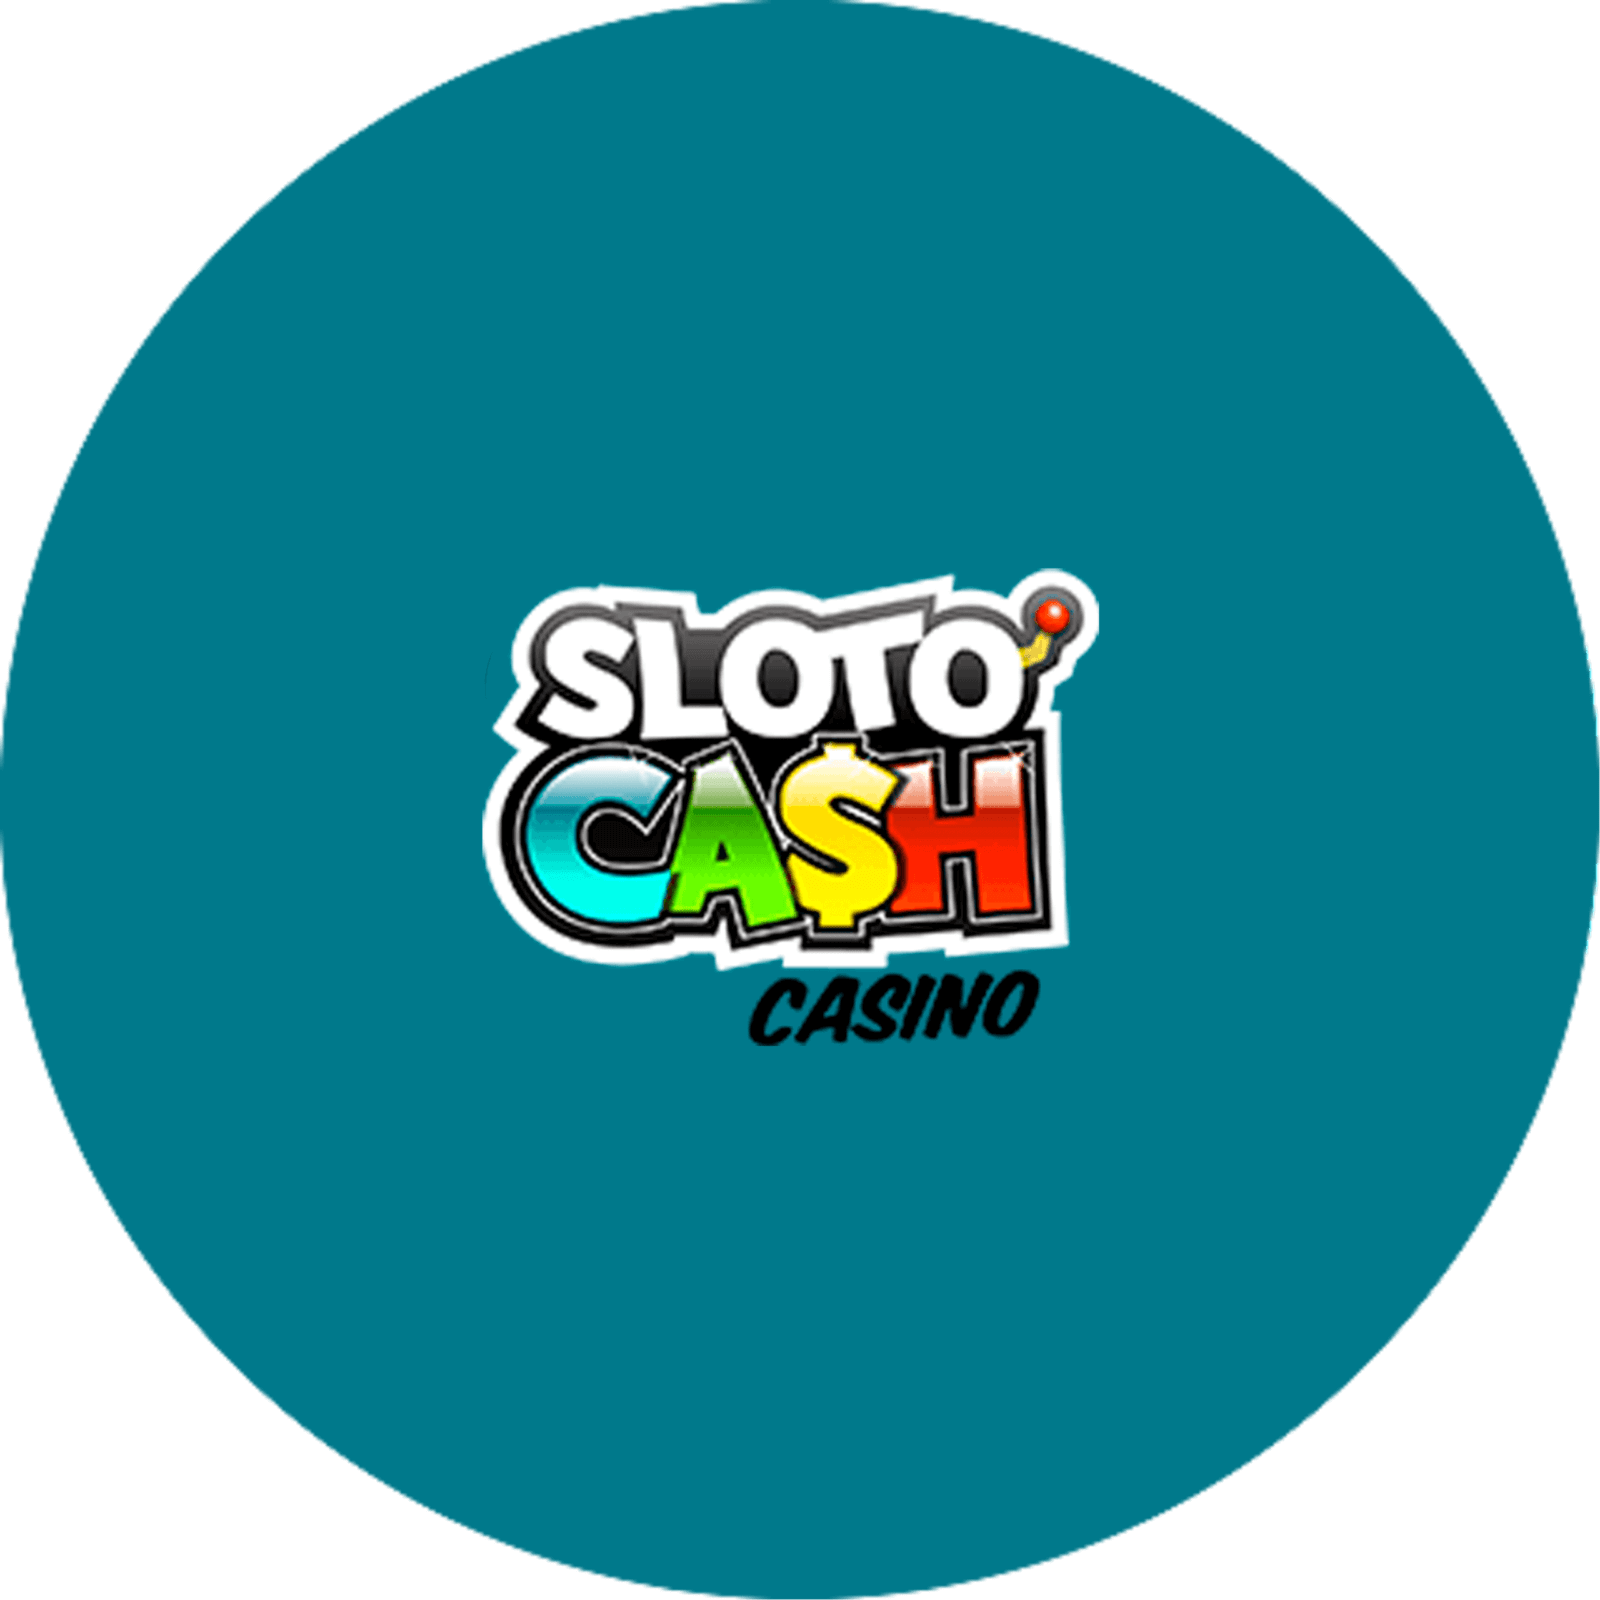 400% Match Bonus at SlotoCash Casino